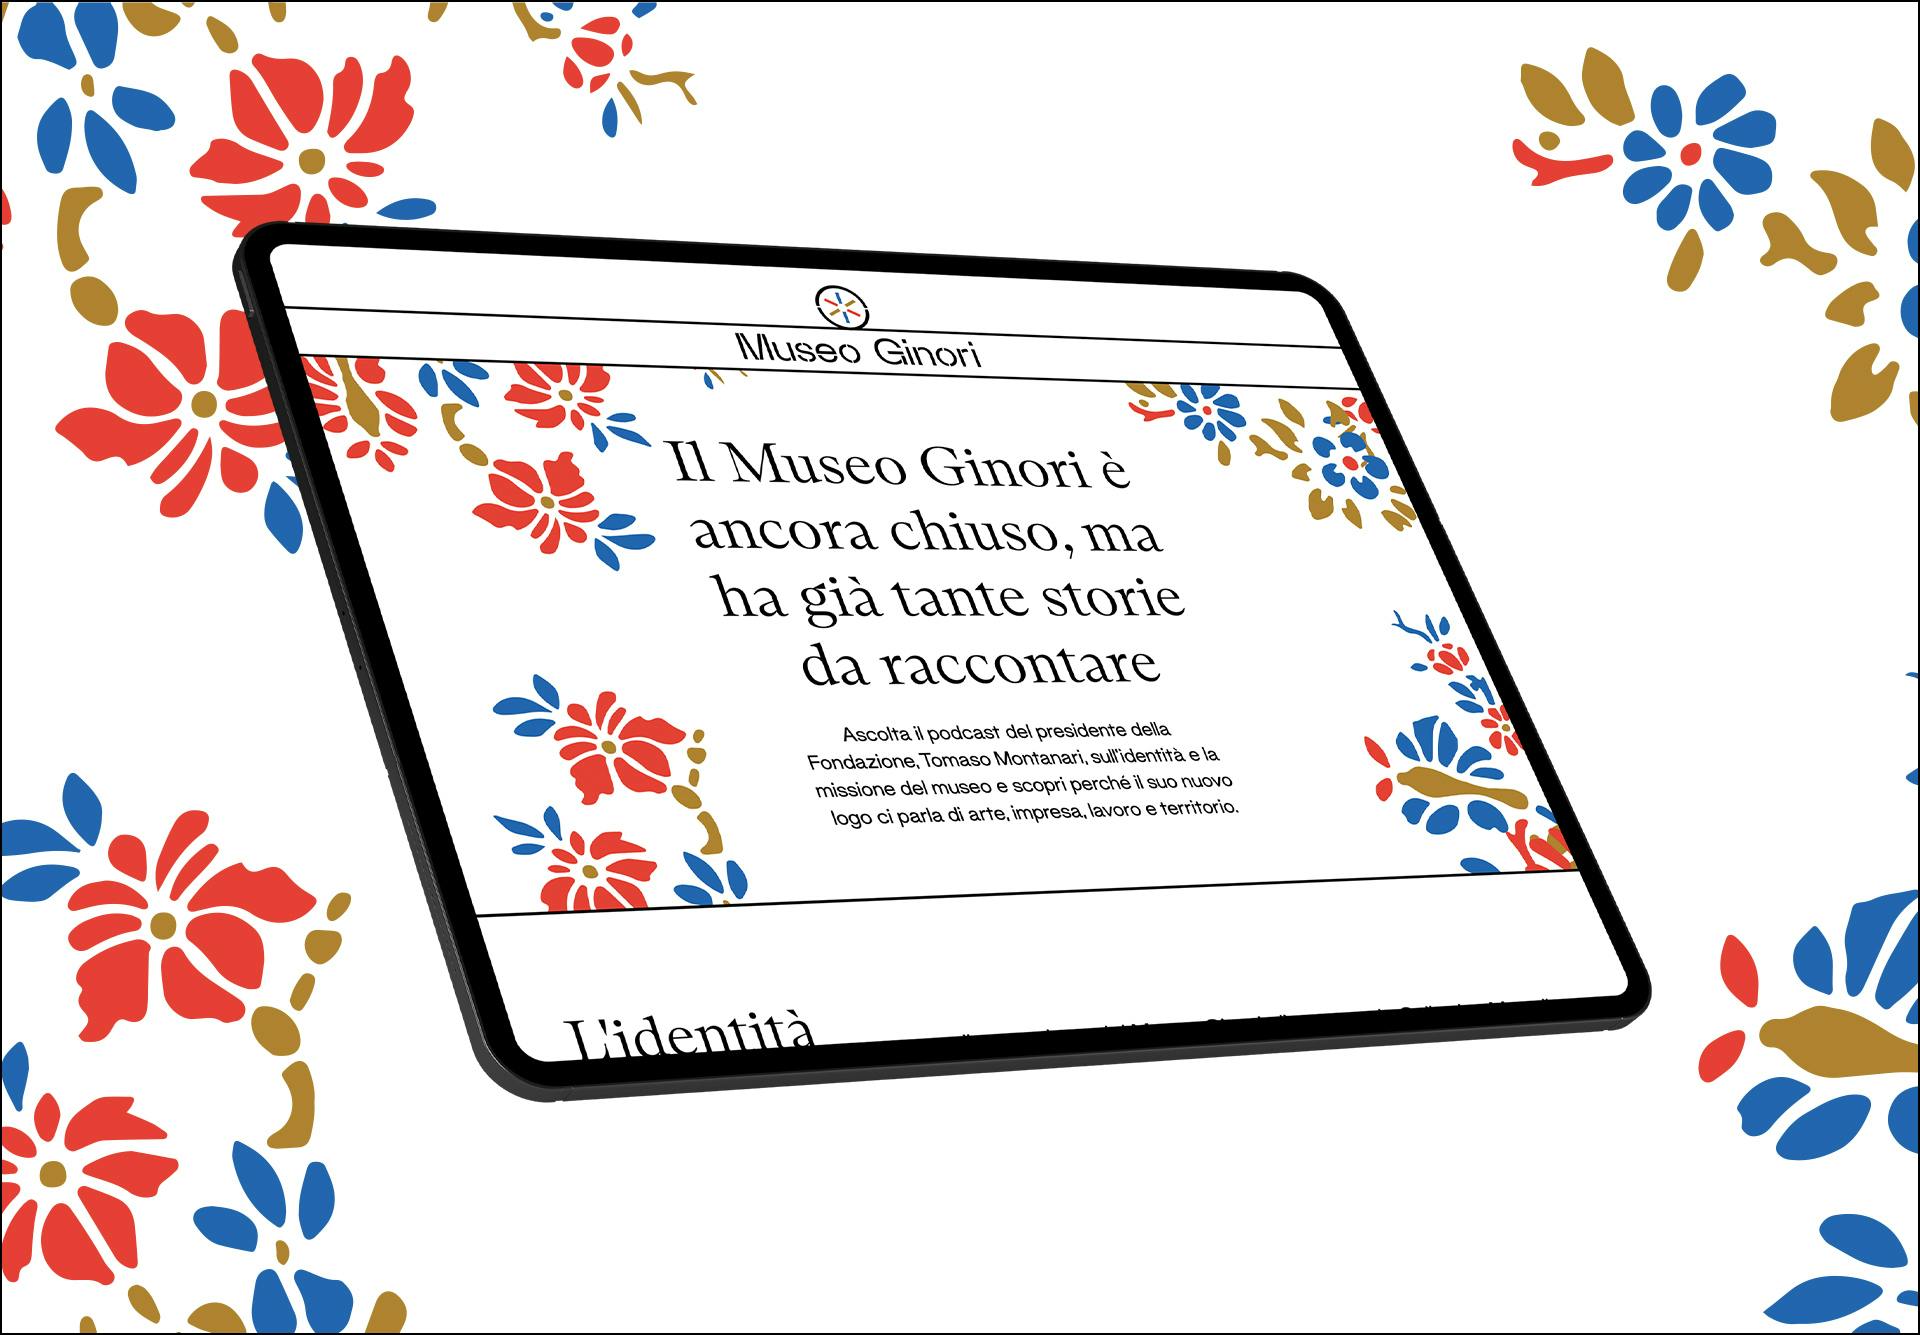 Mockup della homepage del Museo Ginori su un tablet.